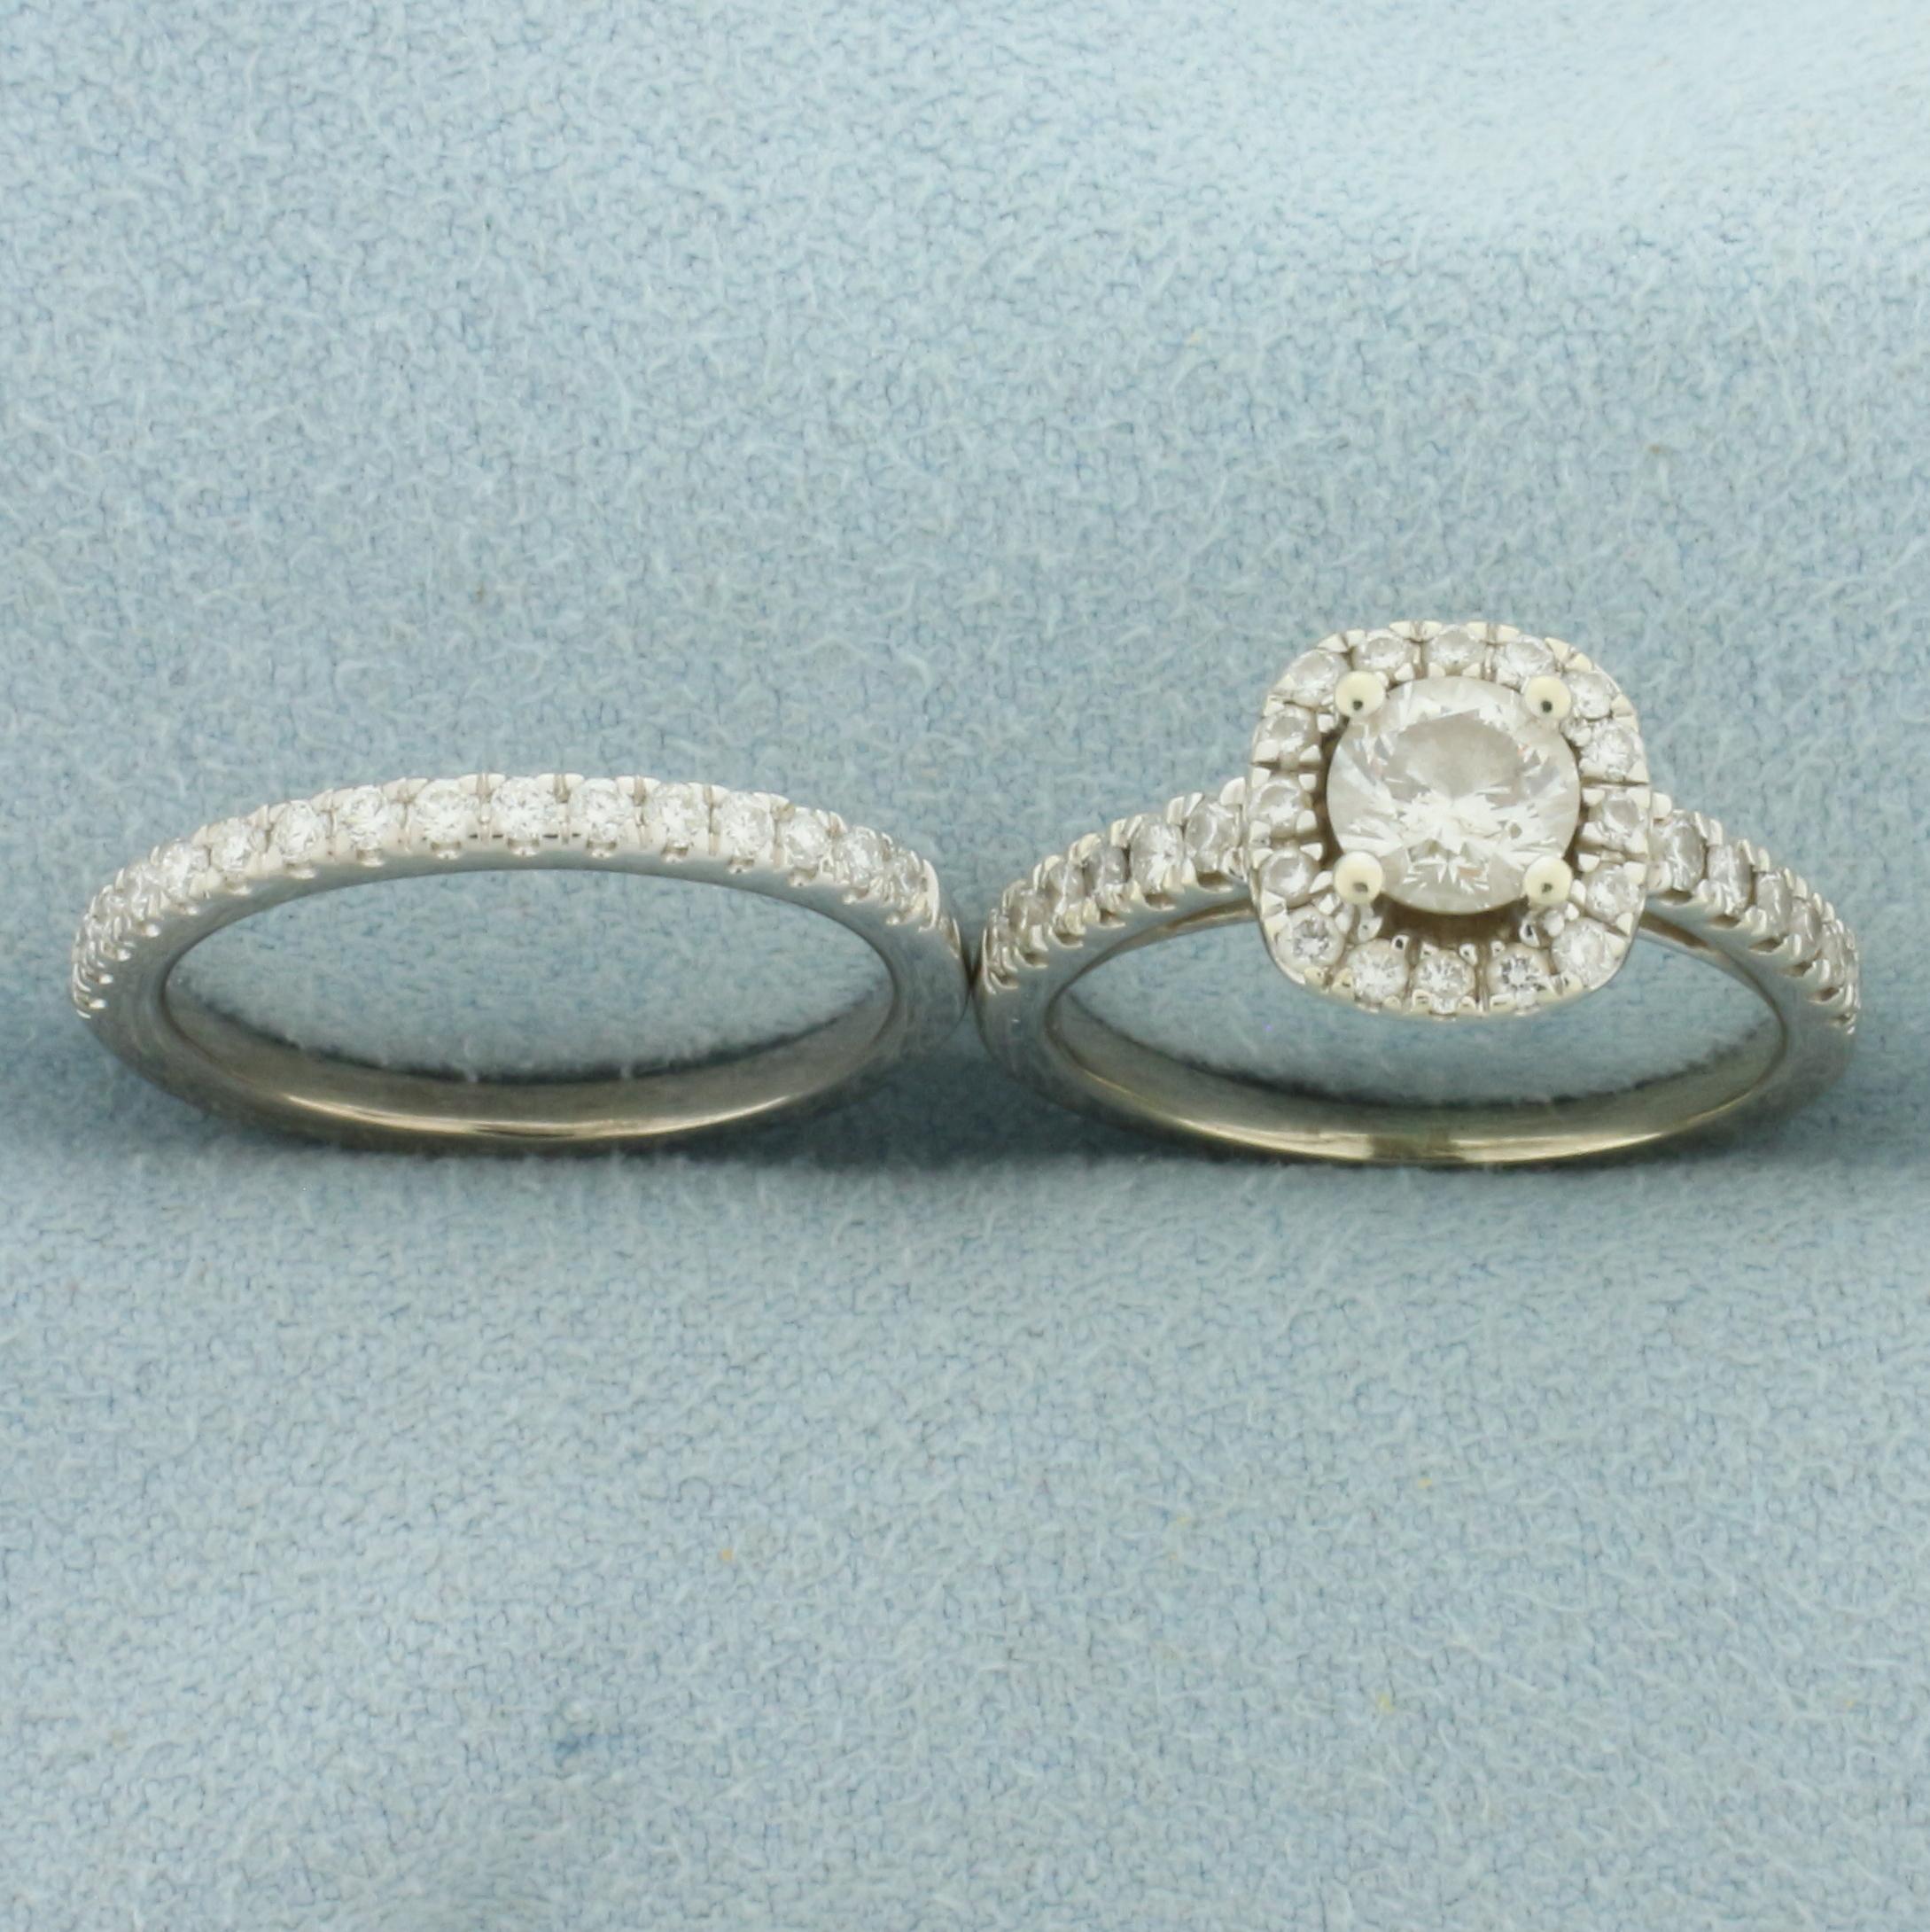 Diamond Halo Engagement And Wedding Band Ring Bridal Set In 14k White Gold